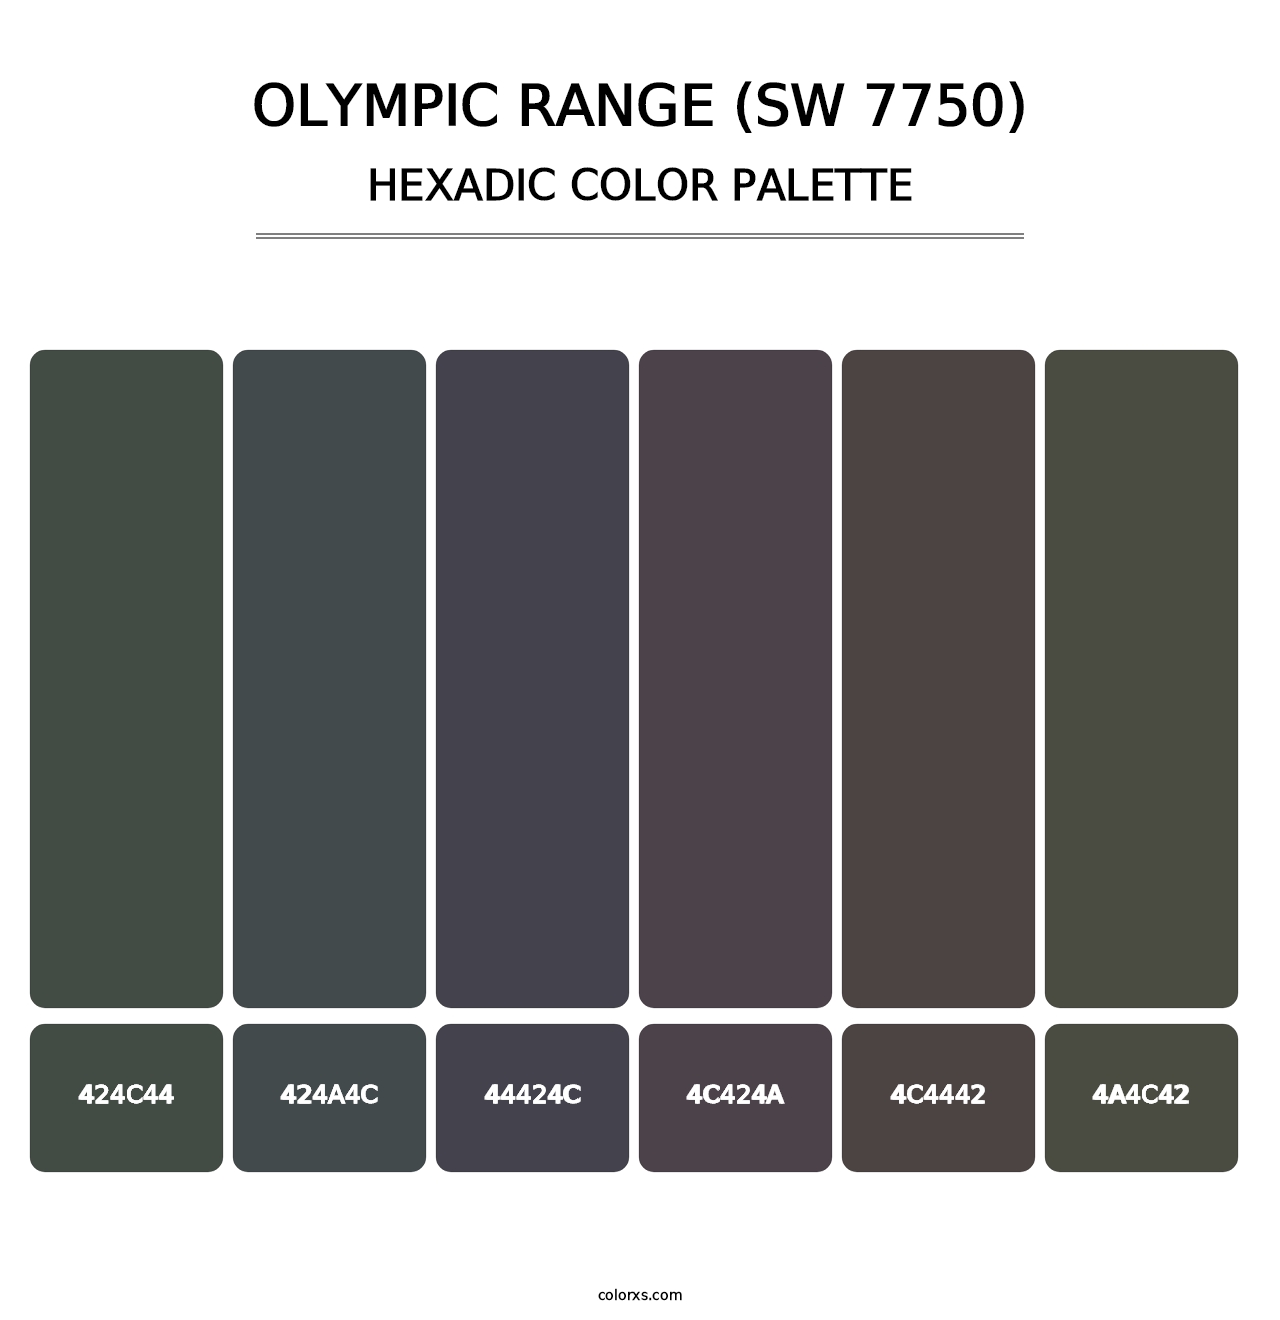 Olympic Range (SW 7750) - Hexadic Color Palette